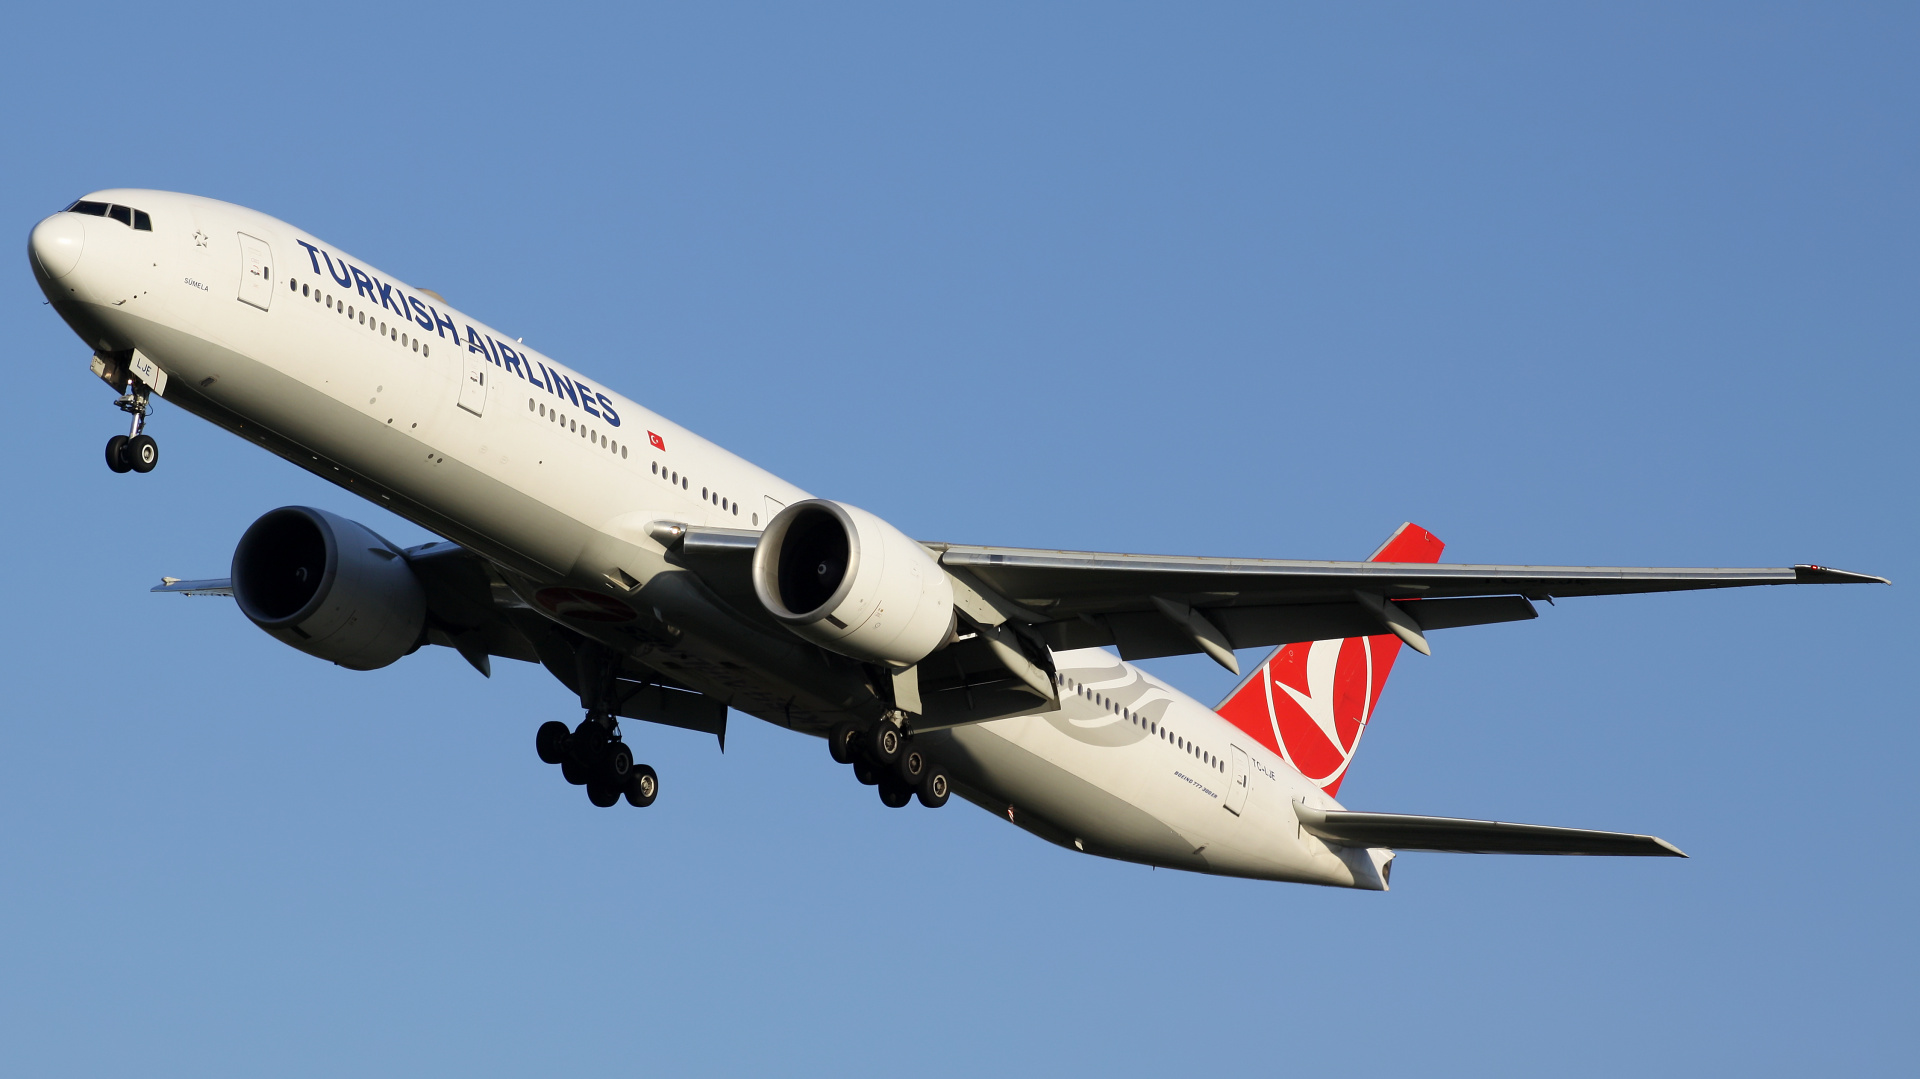 TC-LJE (Aircraft » EPWA Spotting » Boeing 777-300ER » THY Turkish Airlines)